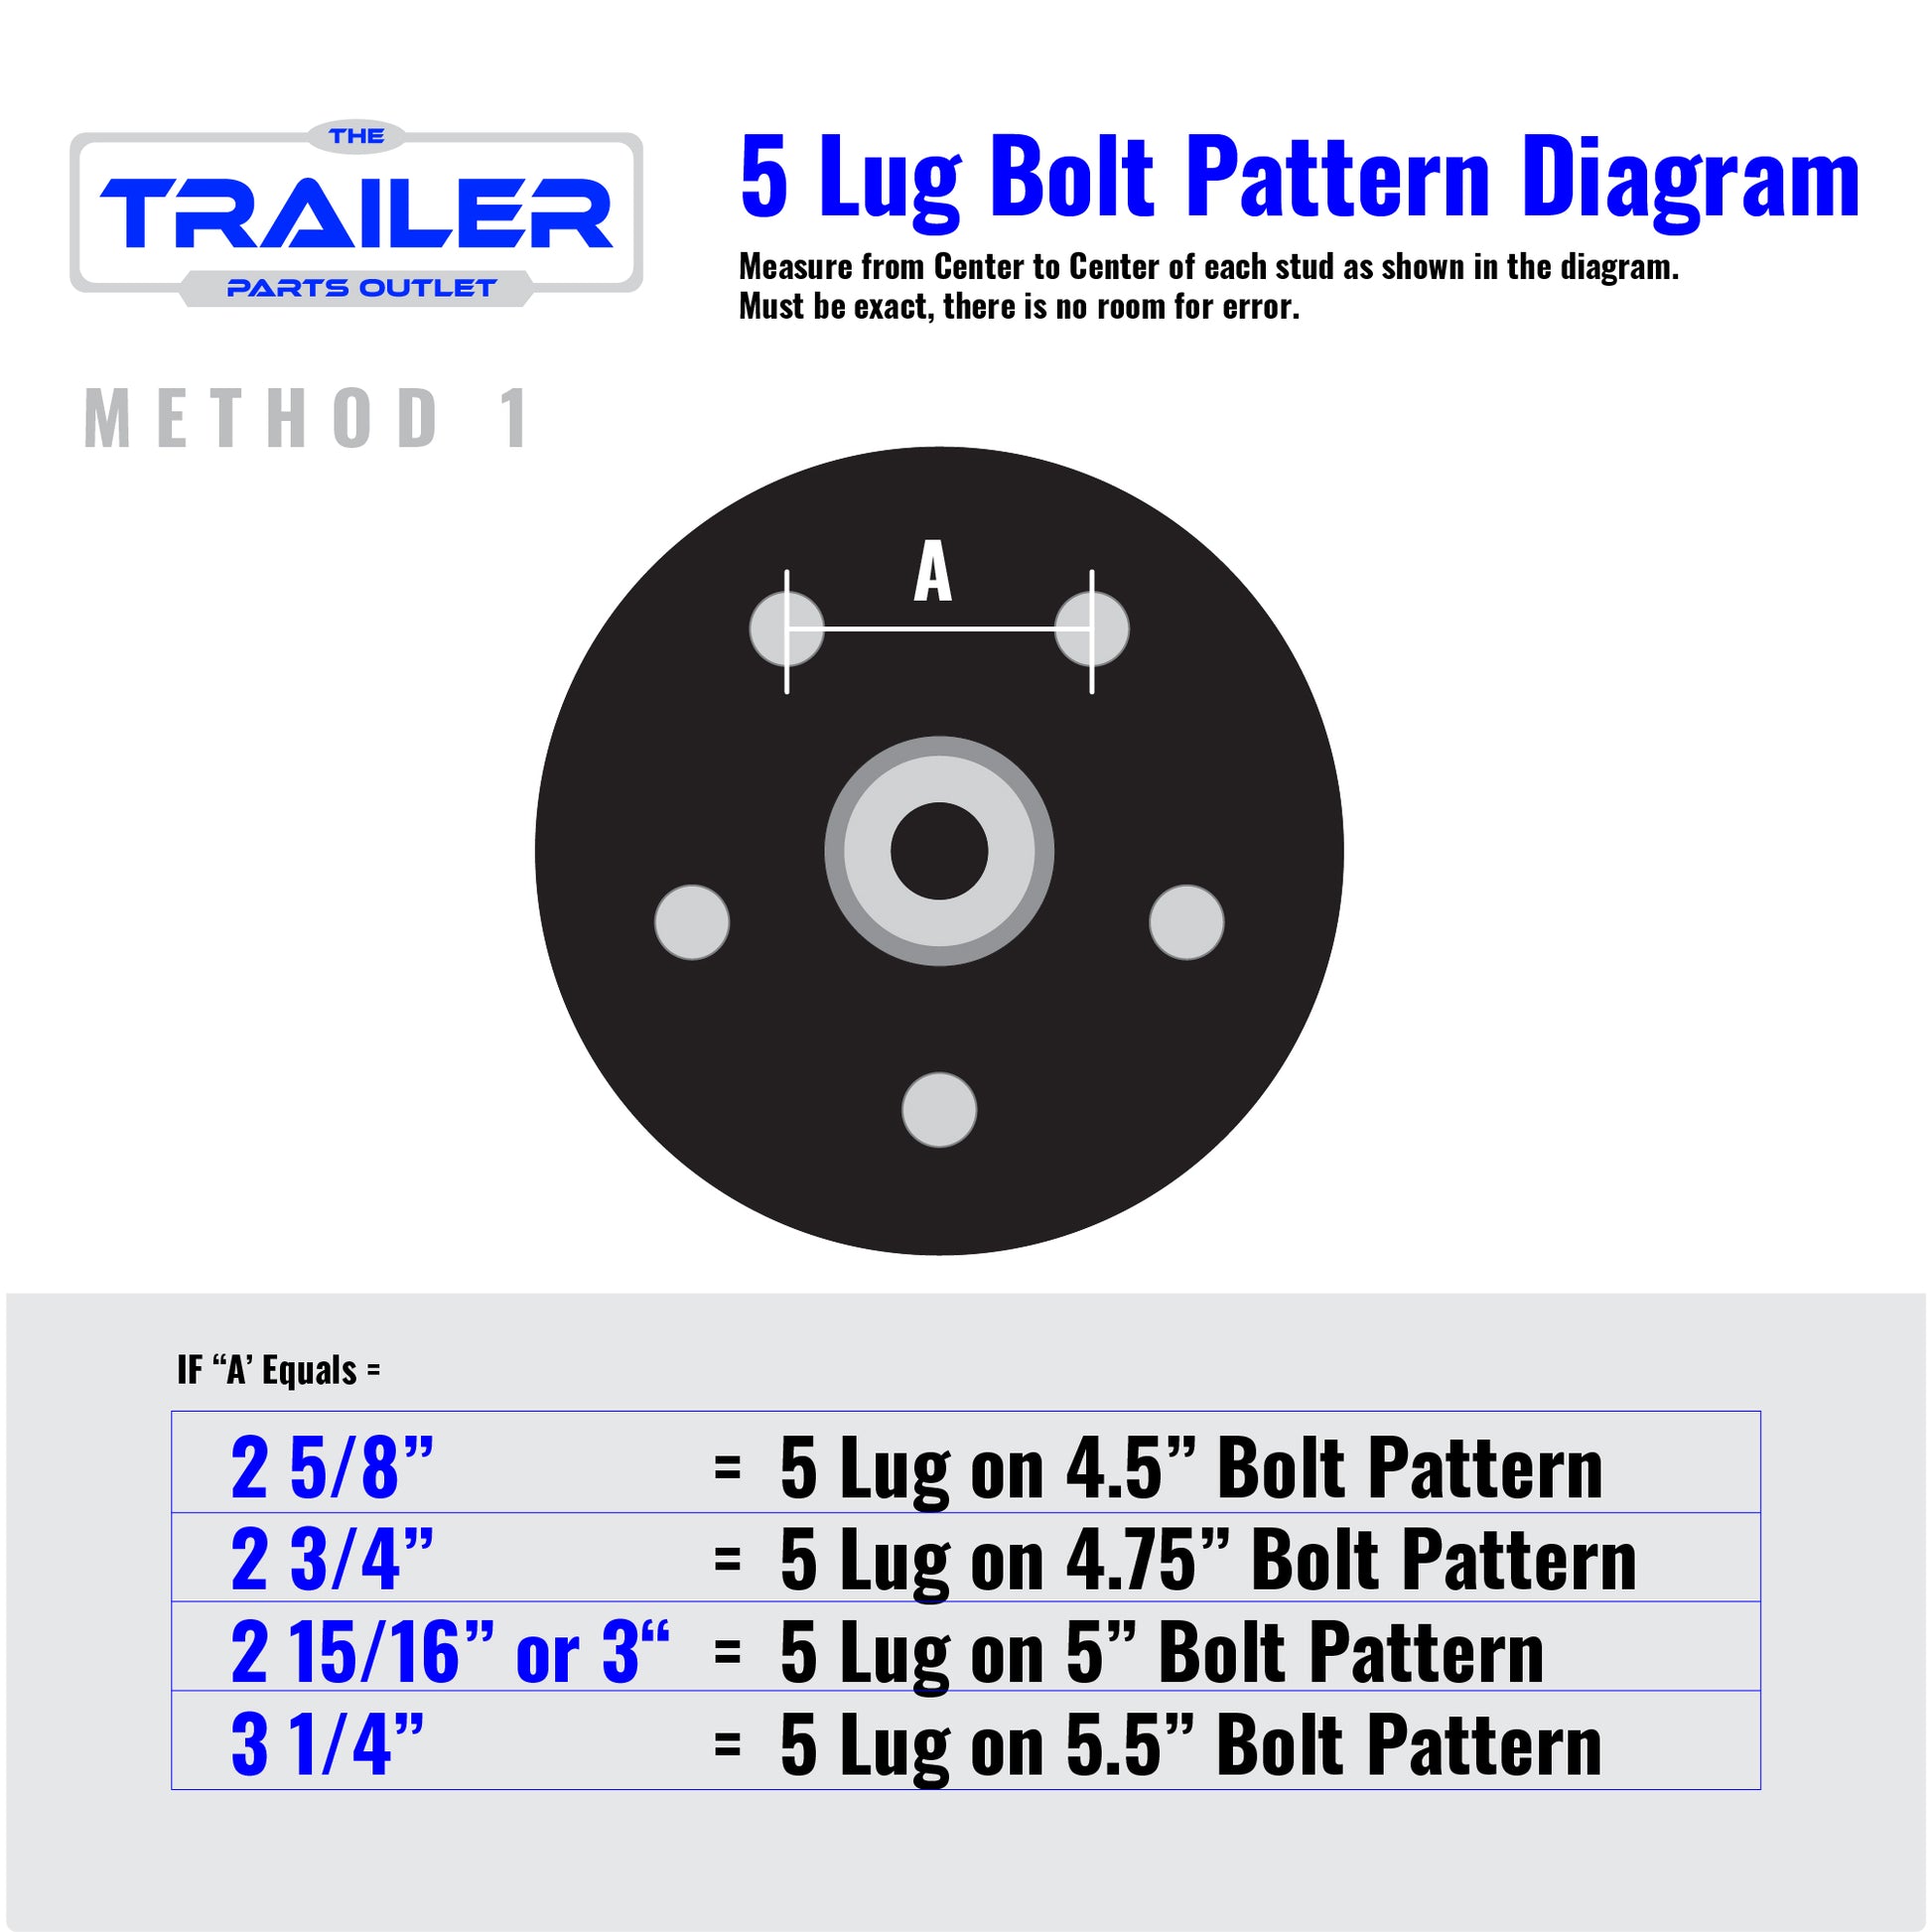 Lug Bolt Pattern Diagram Method 1